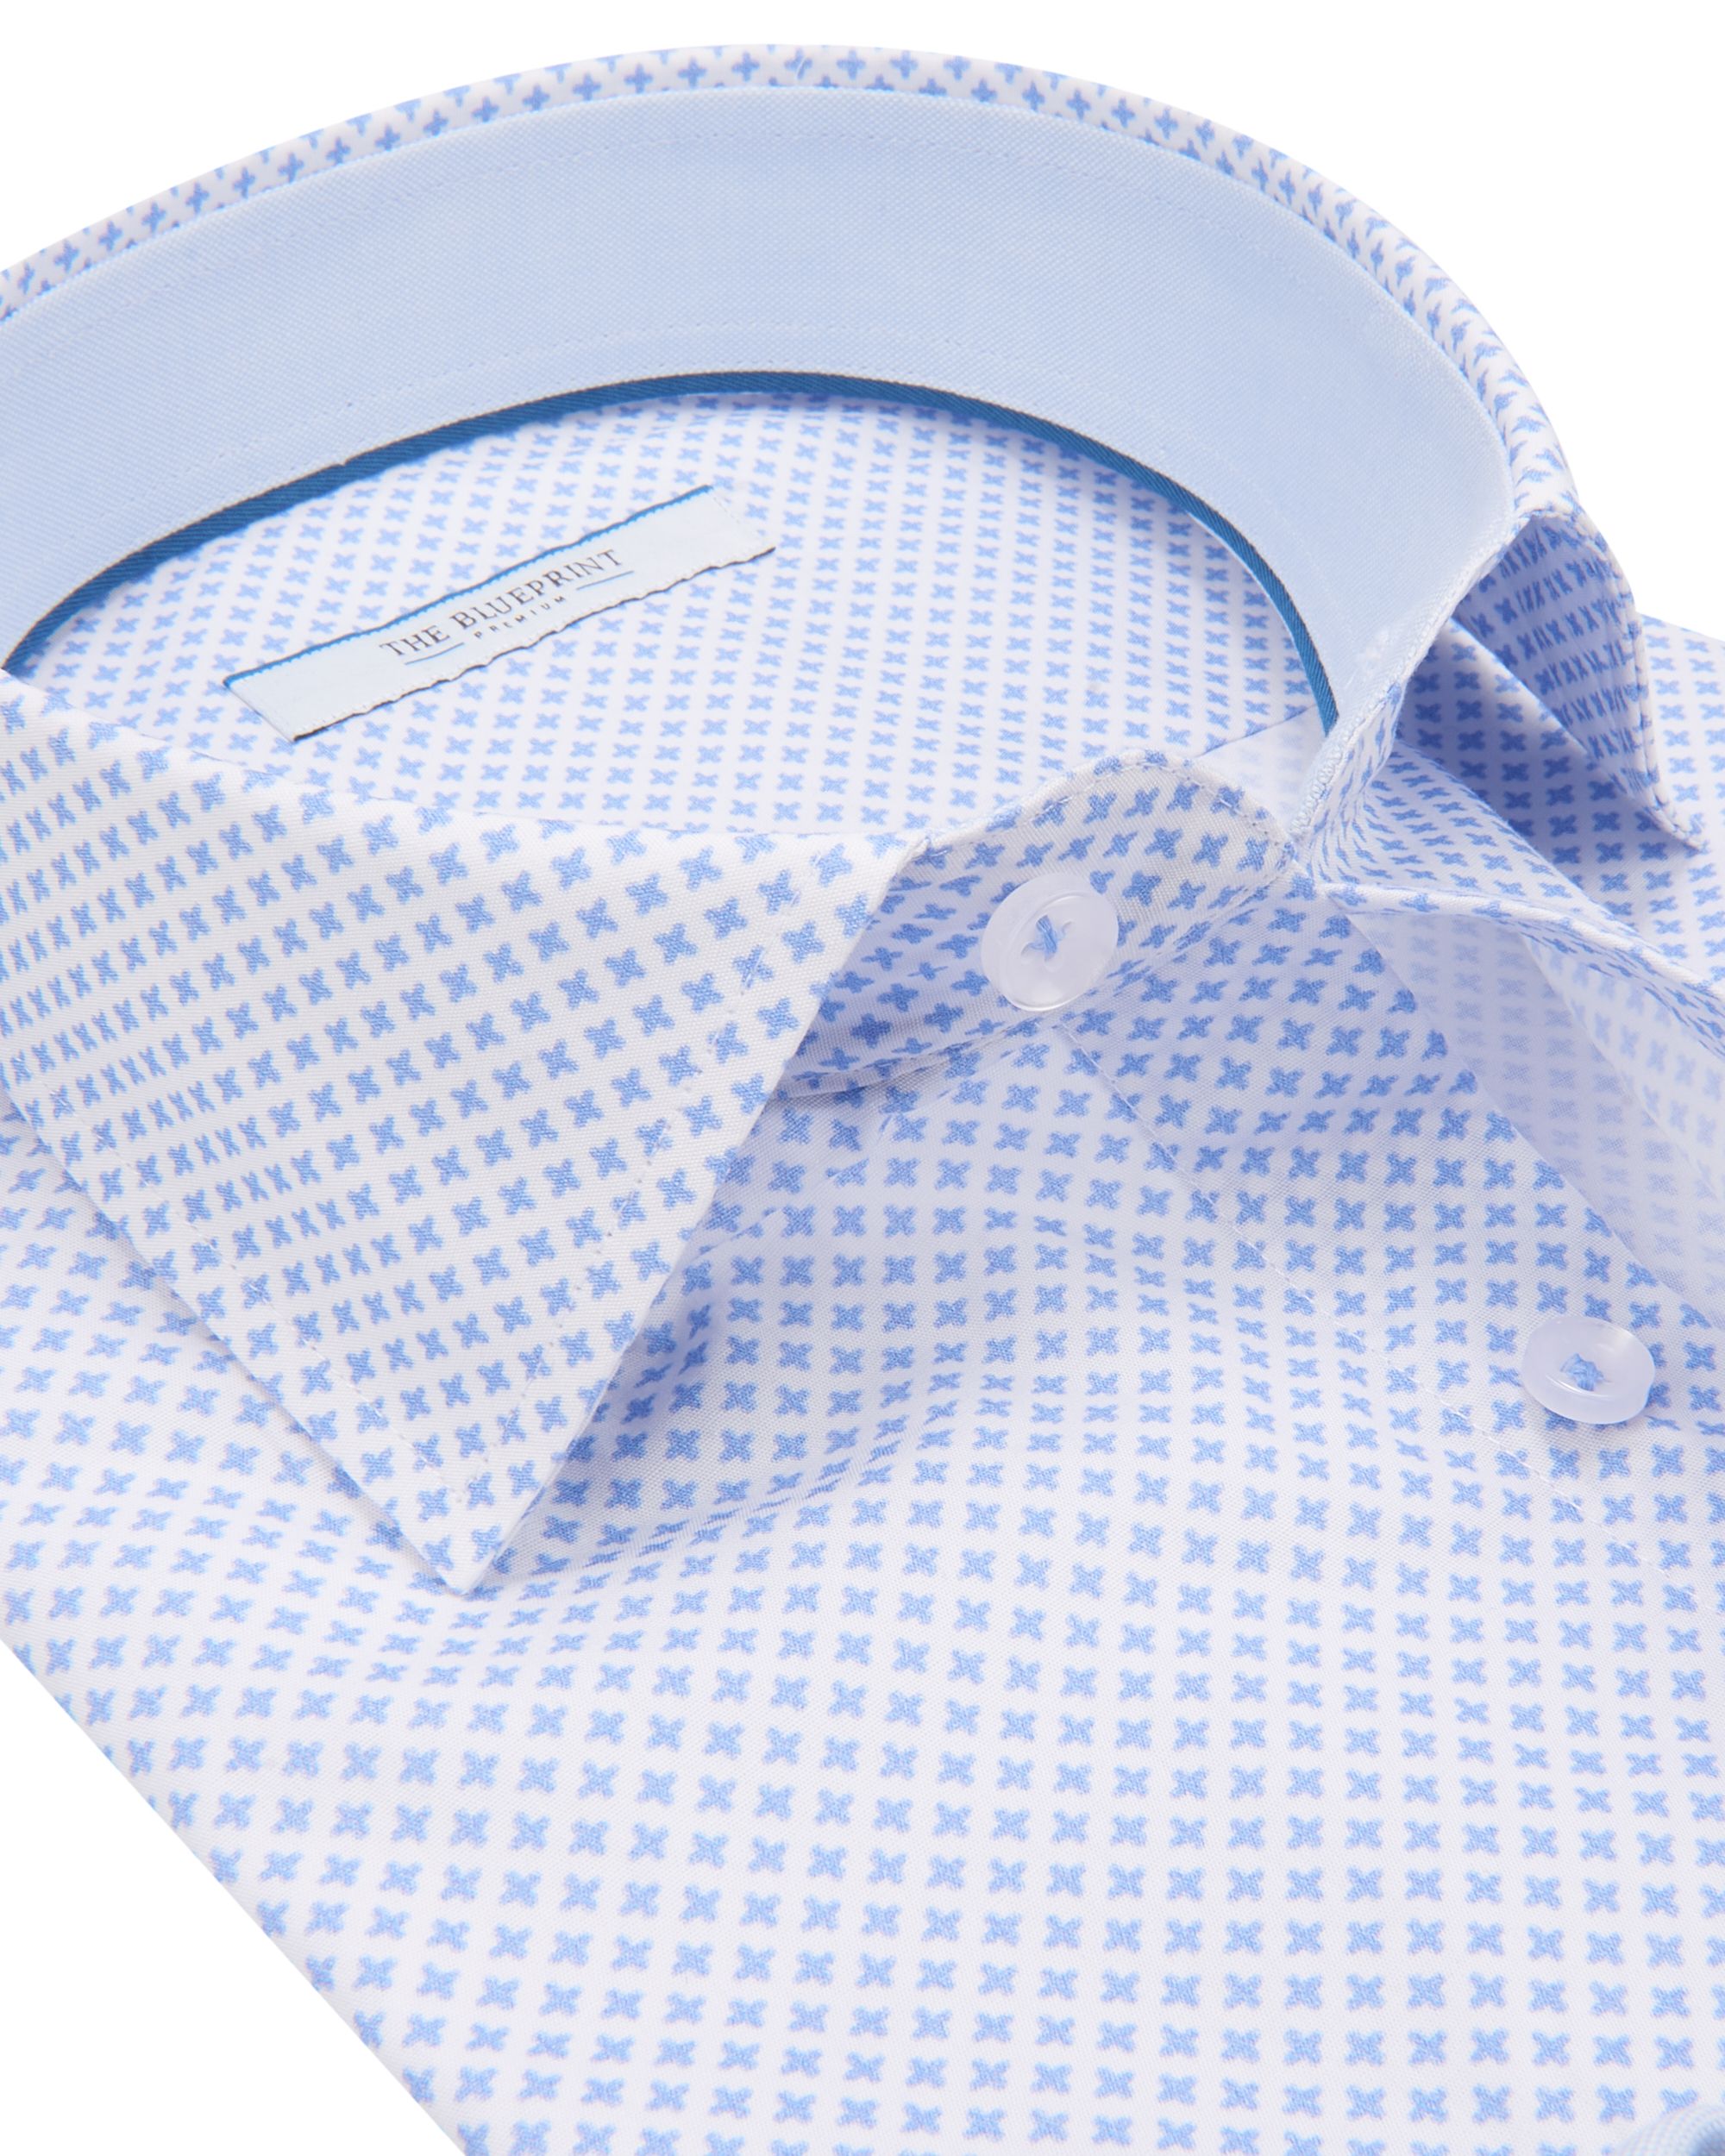 The BLUEPRINT Premium Trendy overhemd LM Blauw dessin 078634-001-L